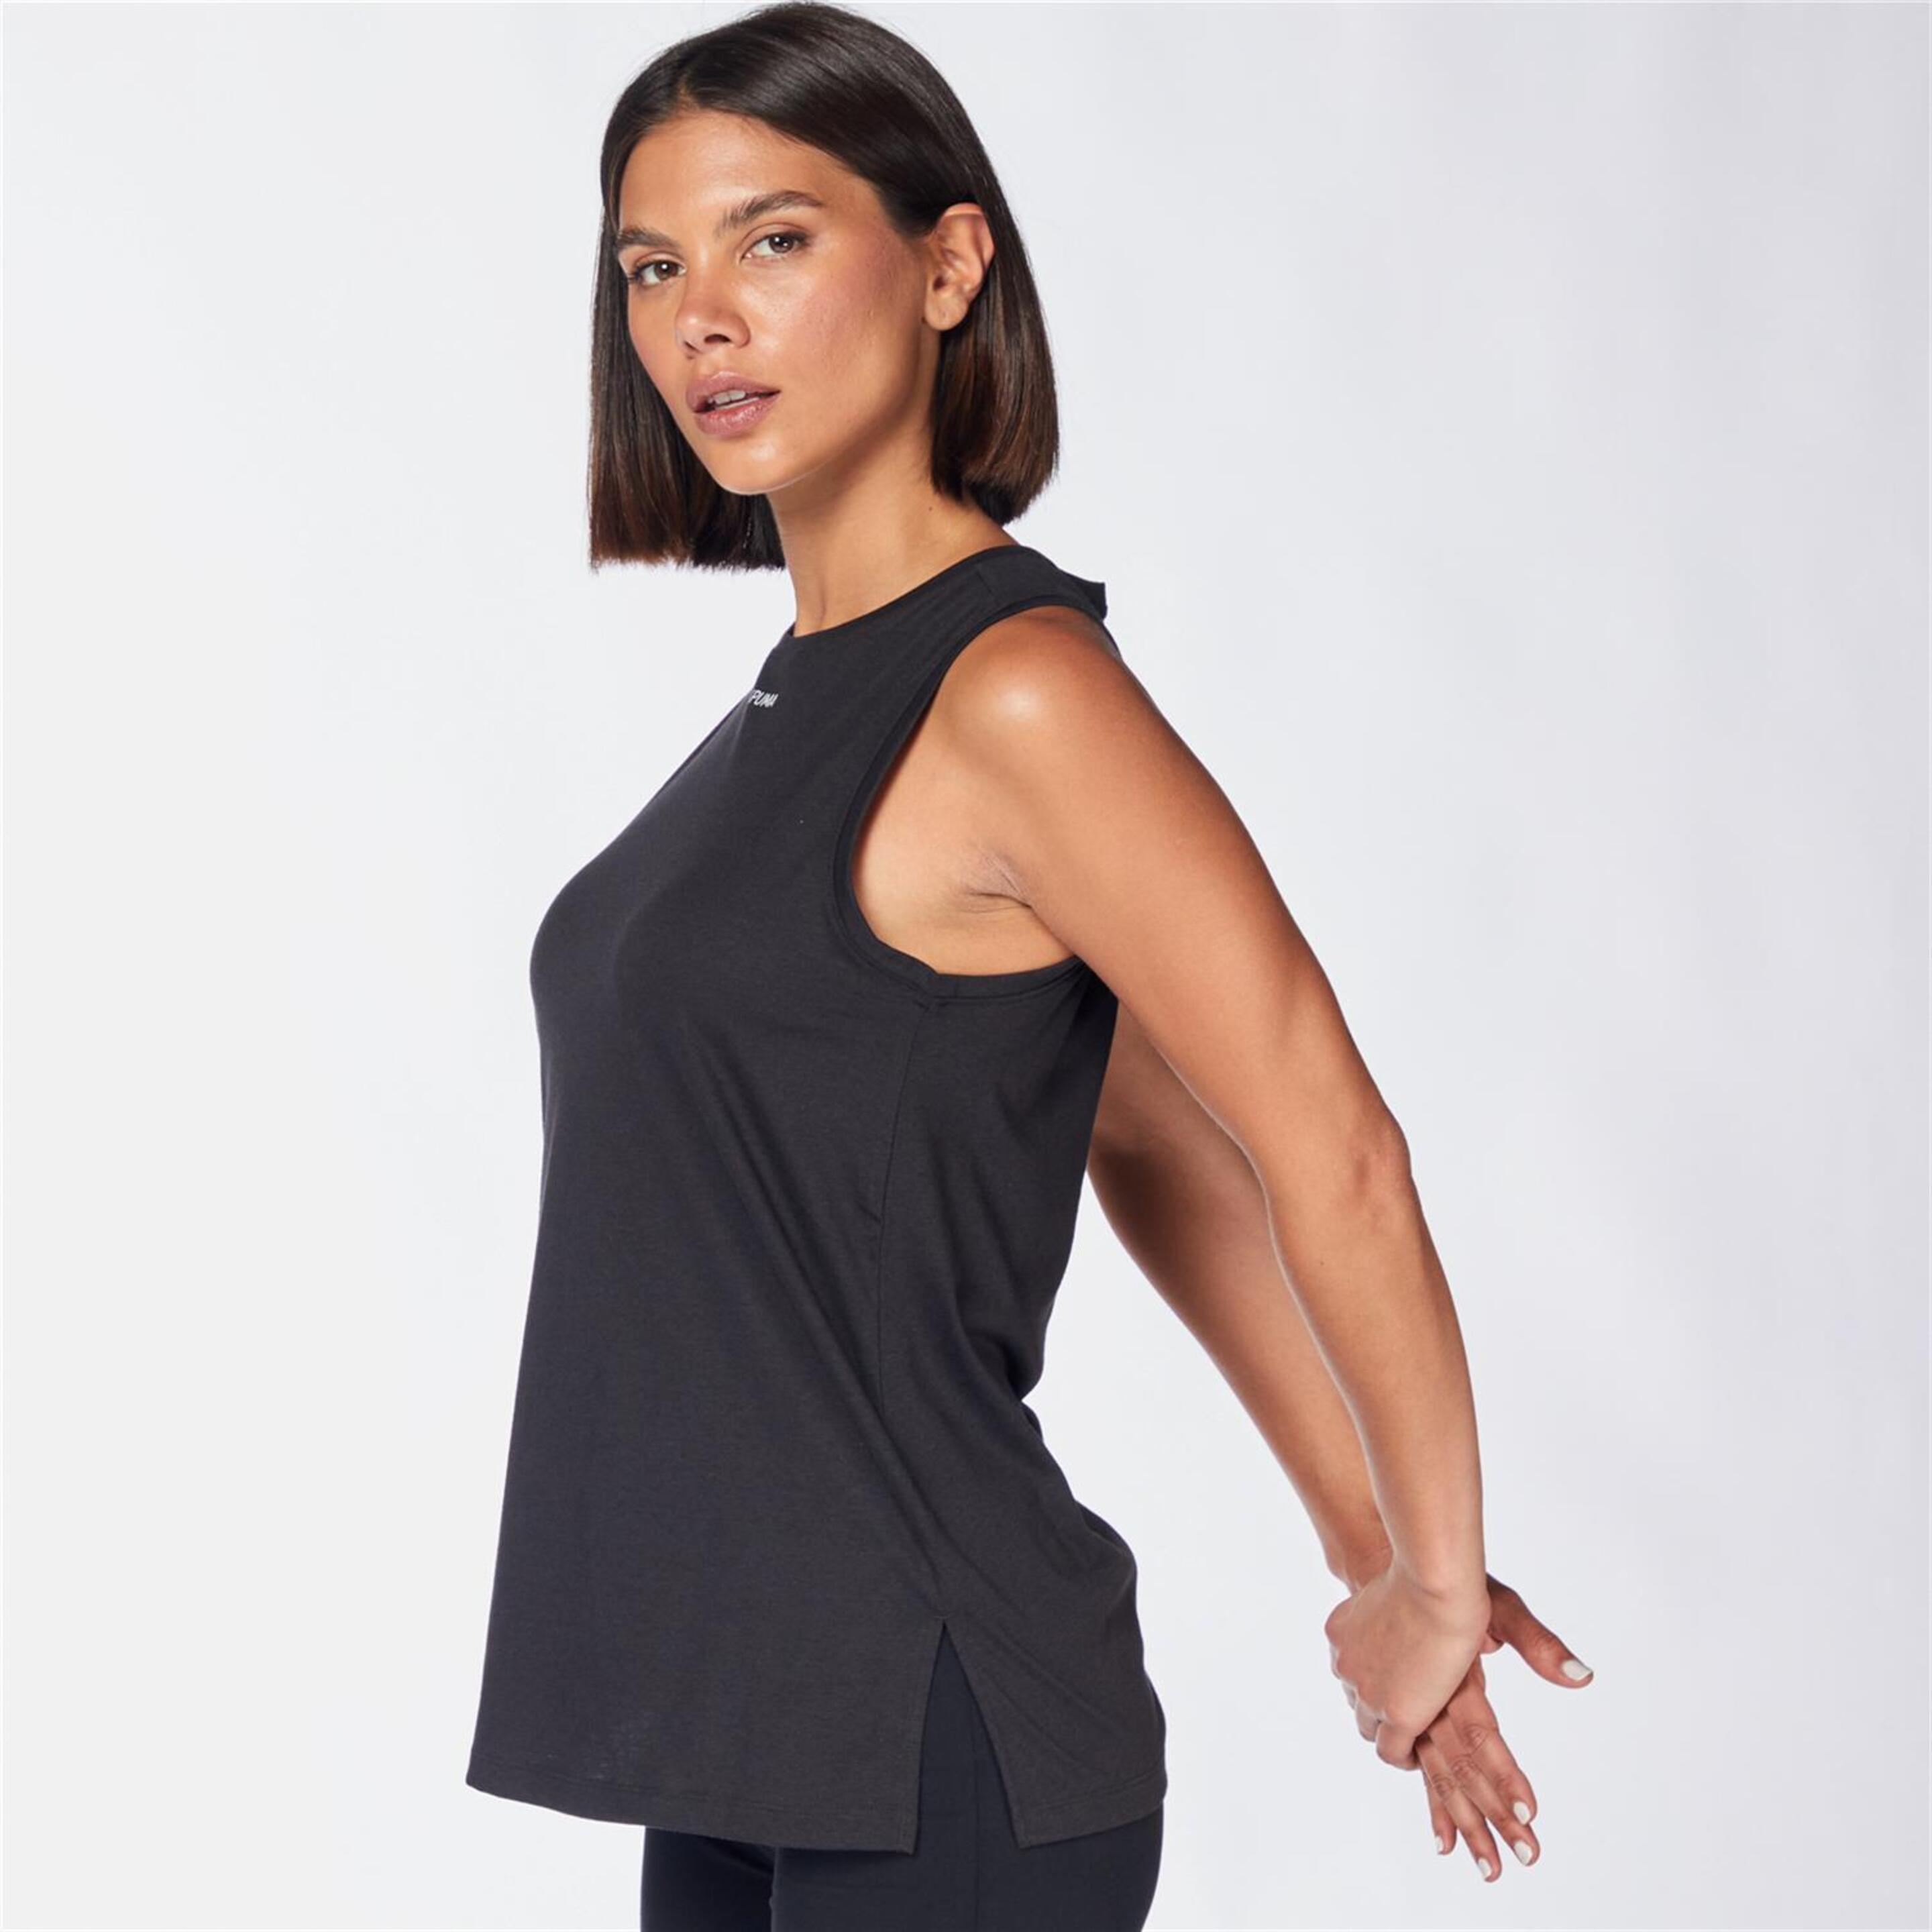 Camiseta Puma - Negro - Camiseta Fitness Mujer